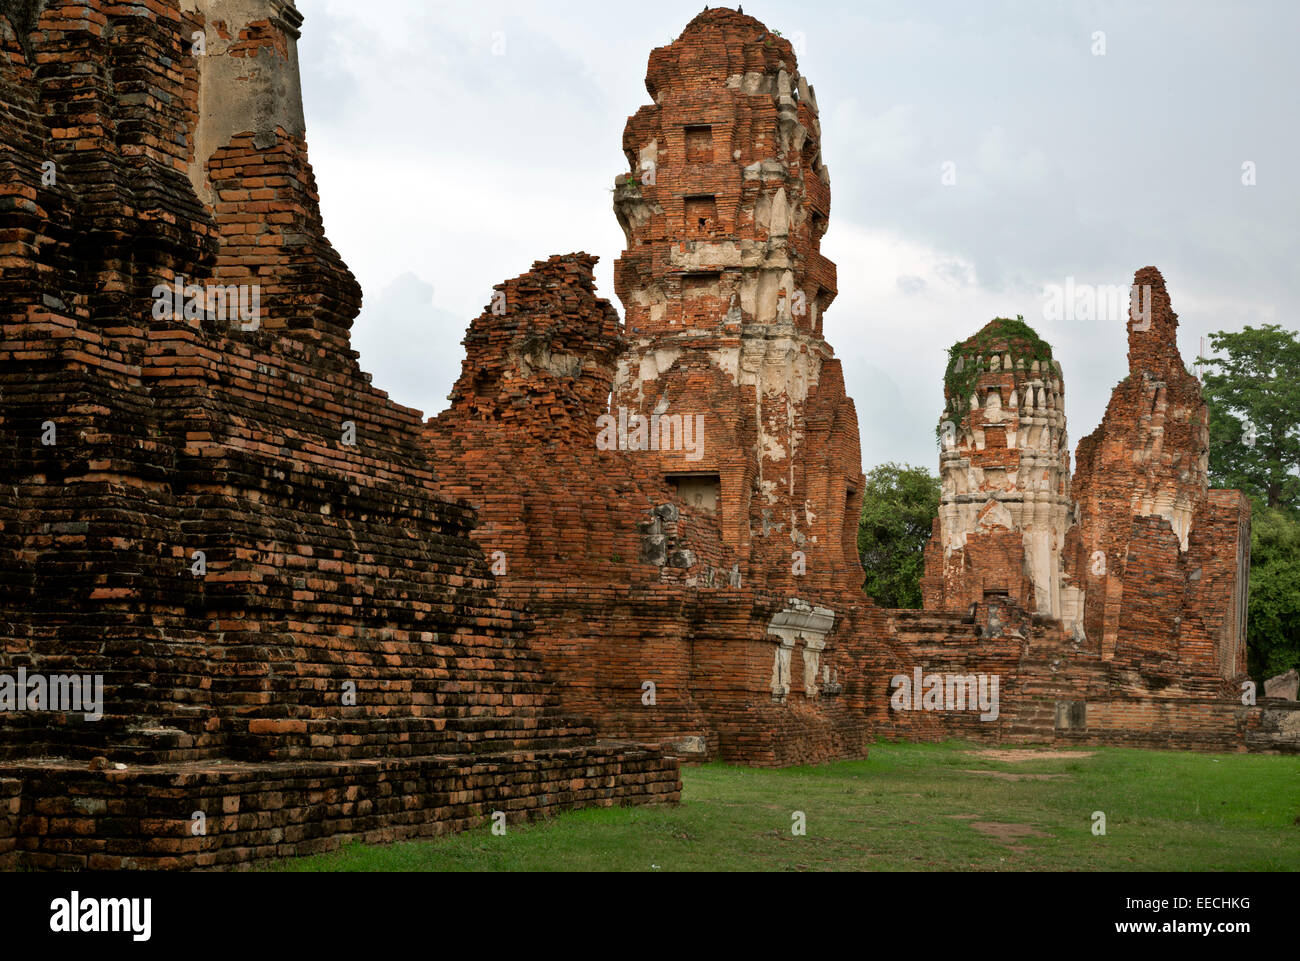 TH00288-00...THAILANDIA - antichi muri di mattoni,torri e fondazioni di Wat Phra Mahathat in Ayutthaya parco storico. Foto Stock